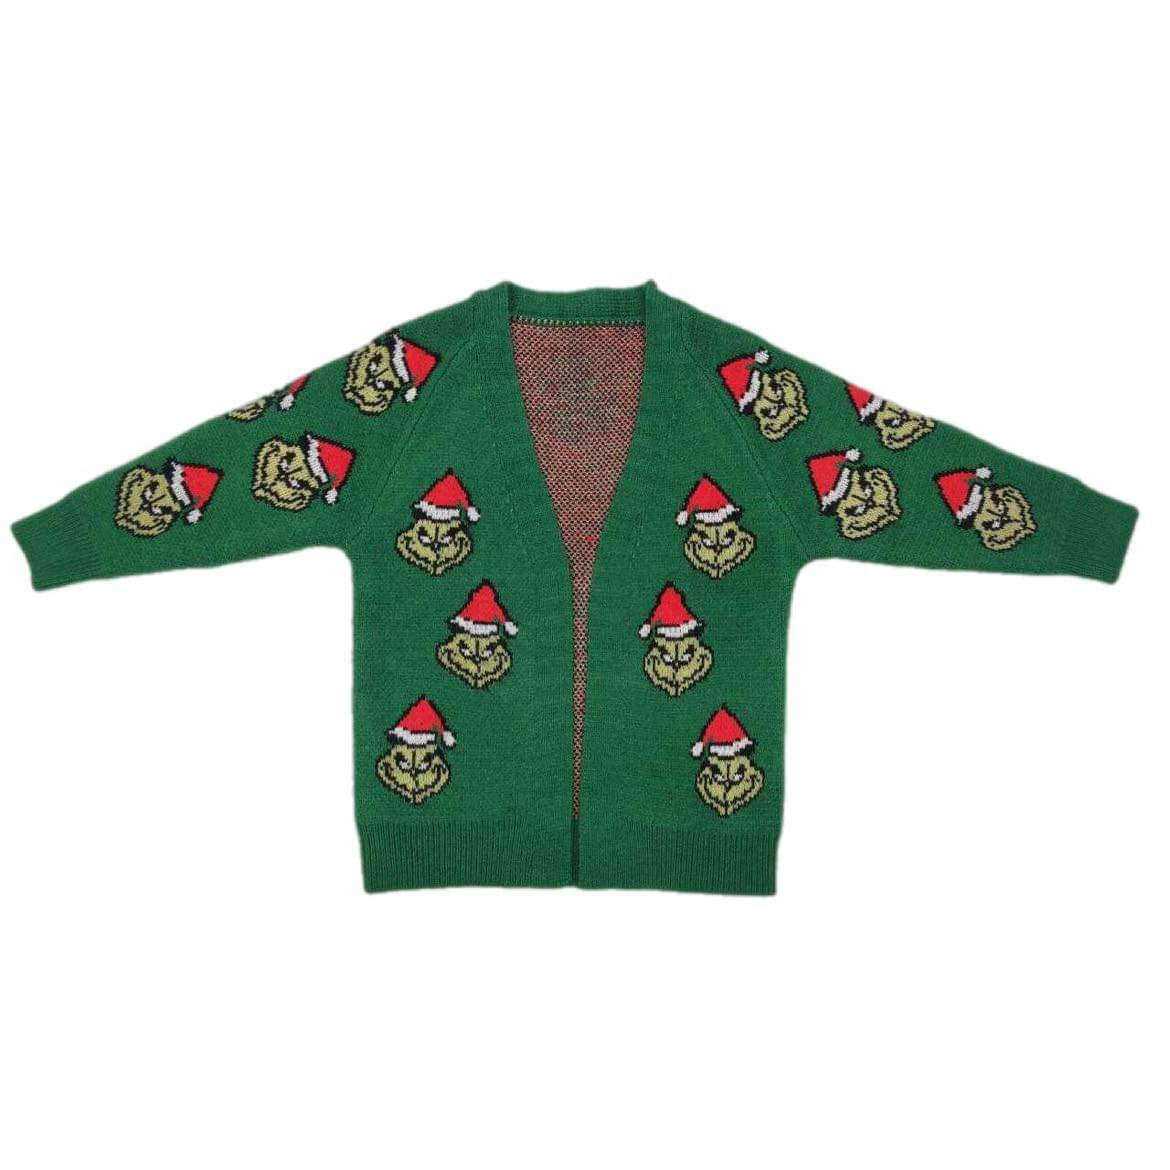 ᴡᴇᴇᴋʟʏ ᴘʀᴇ ᴏʀᴅᴇʀ Christmas Mean Green Sweater Cardigan